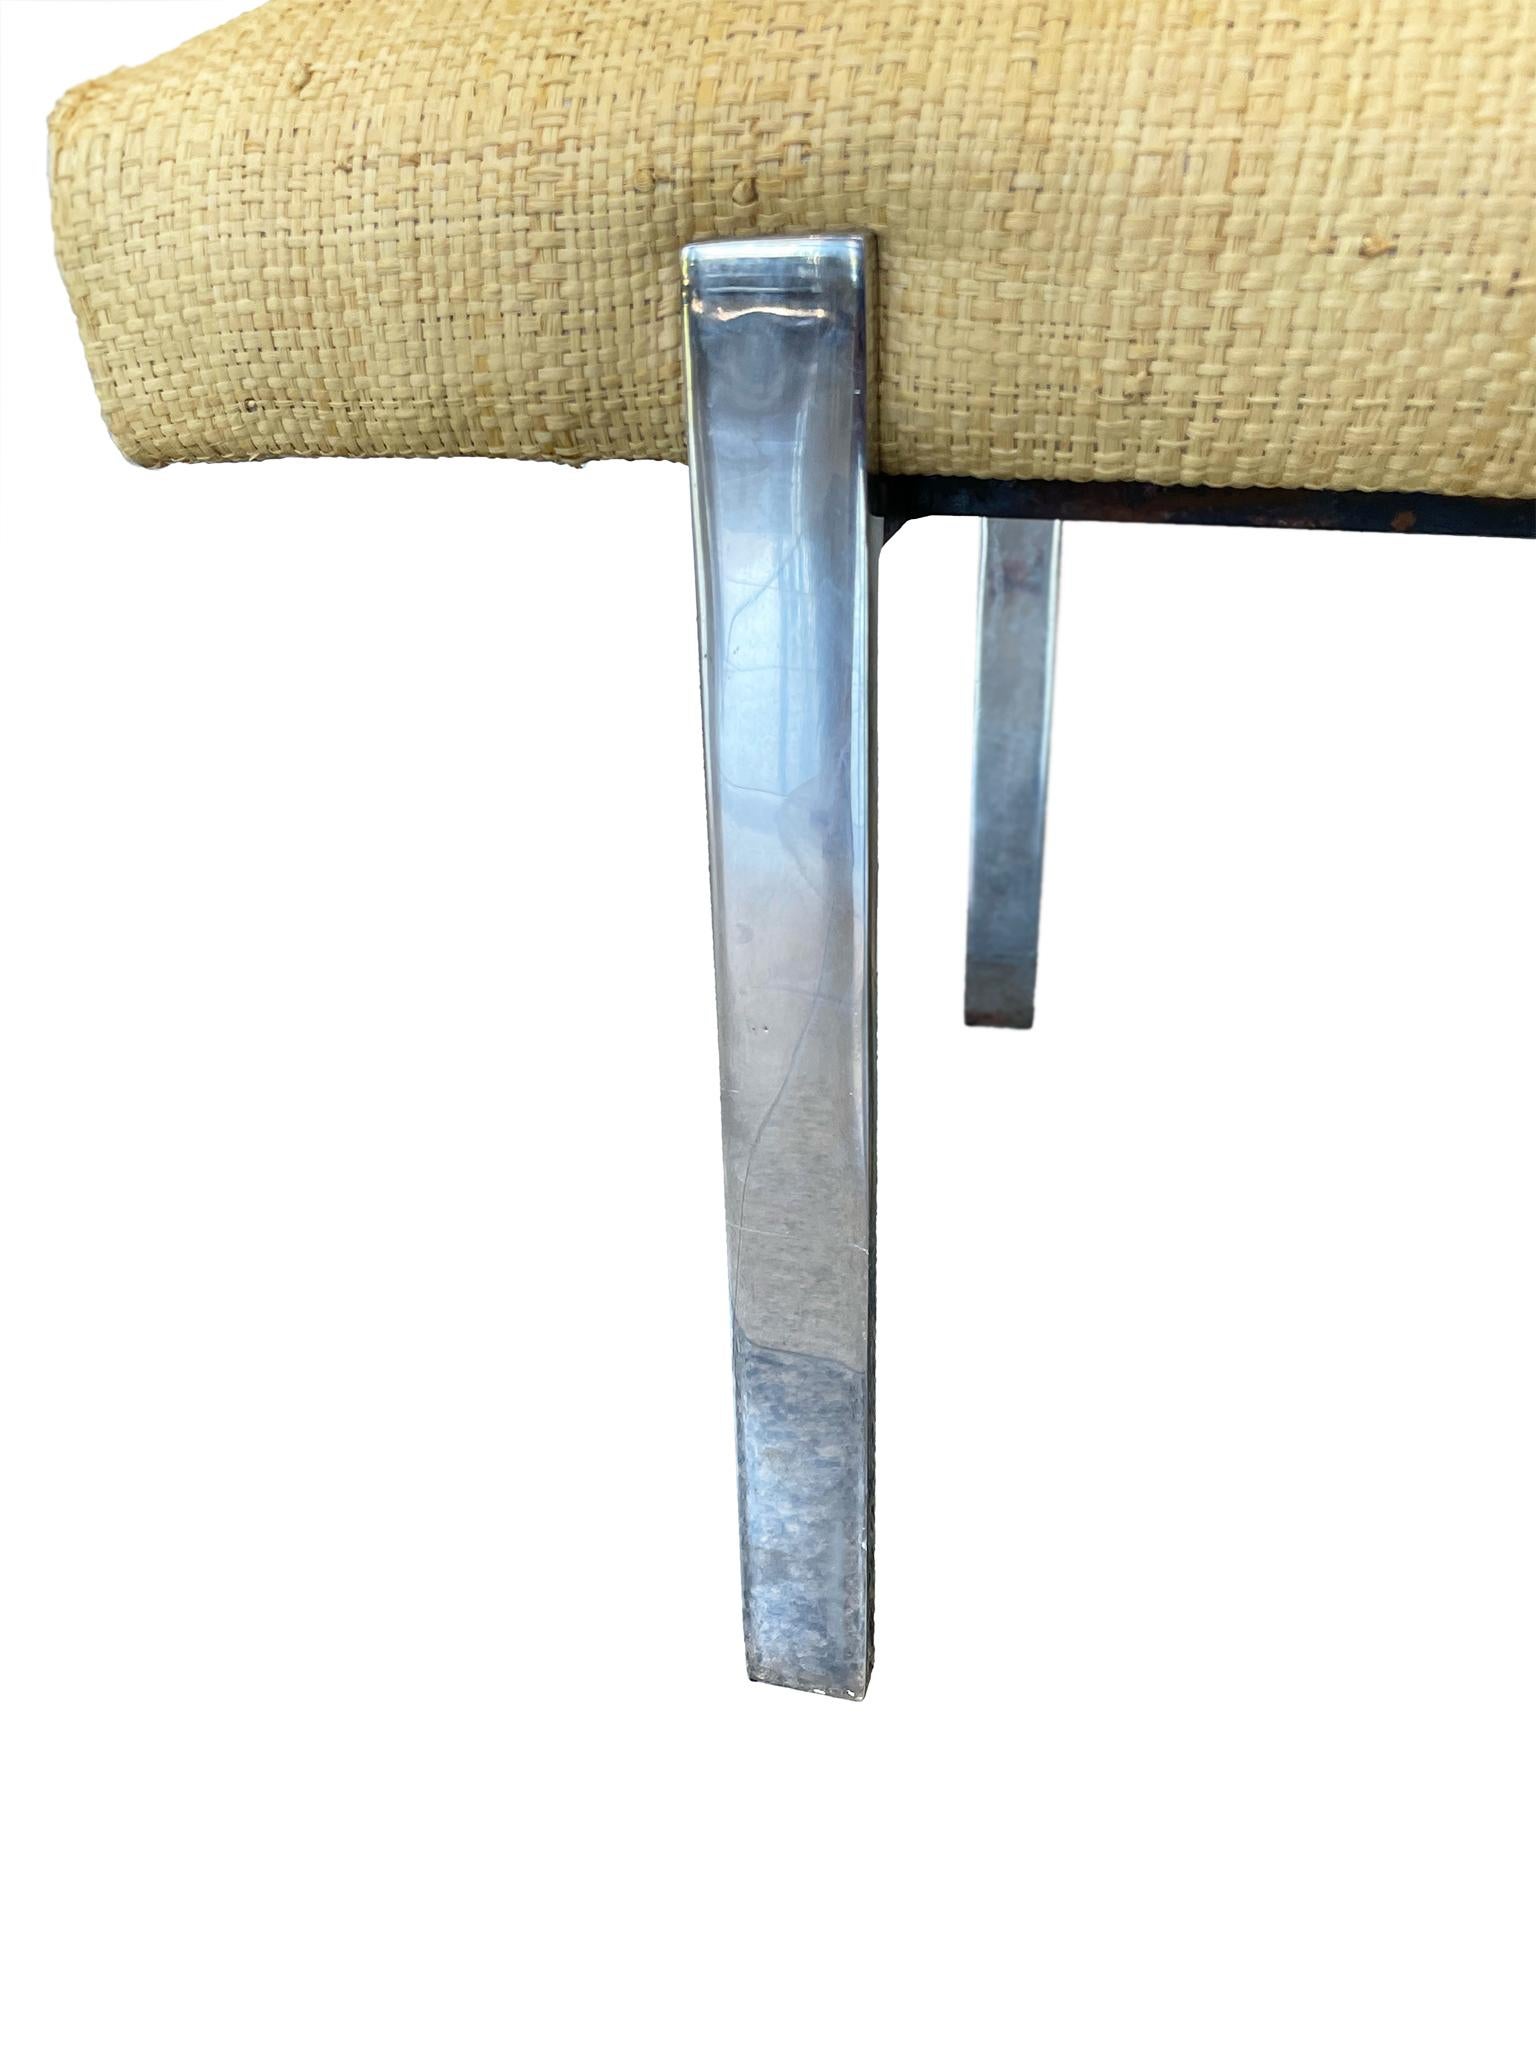 Karl Springer Style Grasscloth-Upholstered Chrome Bench For Sale 4